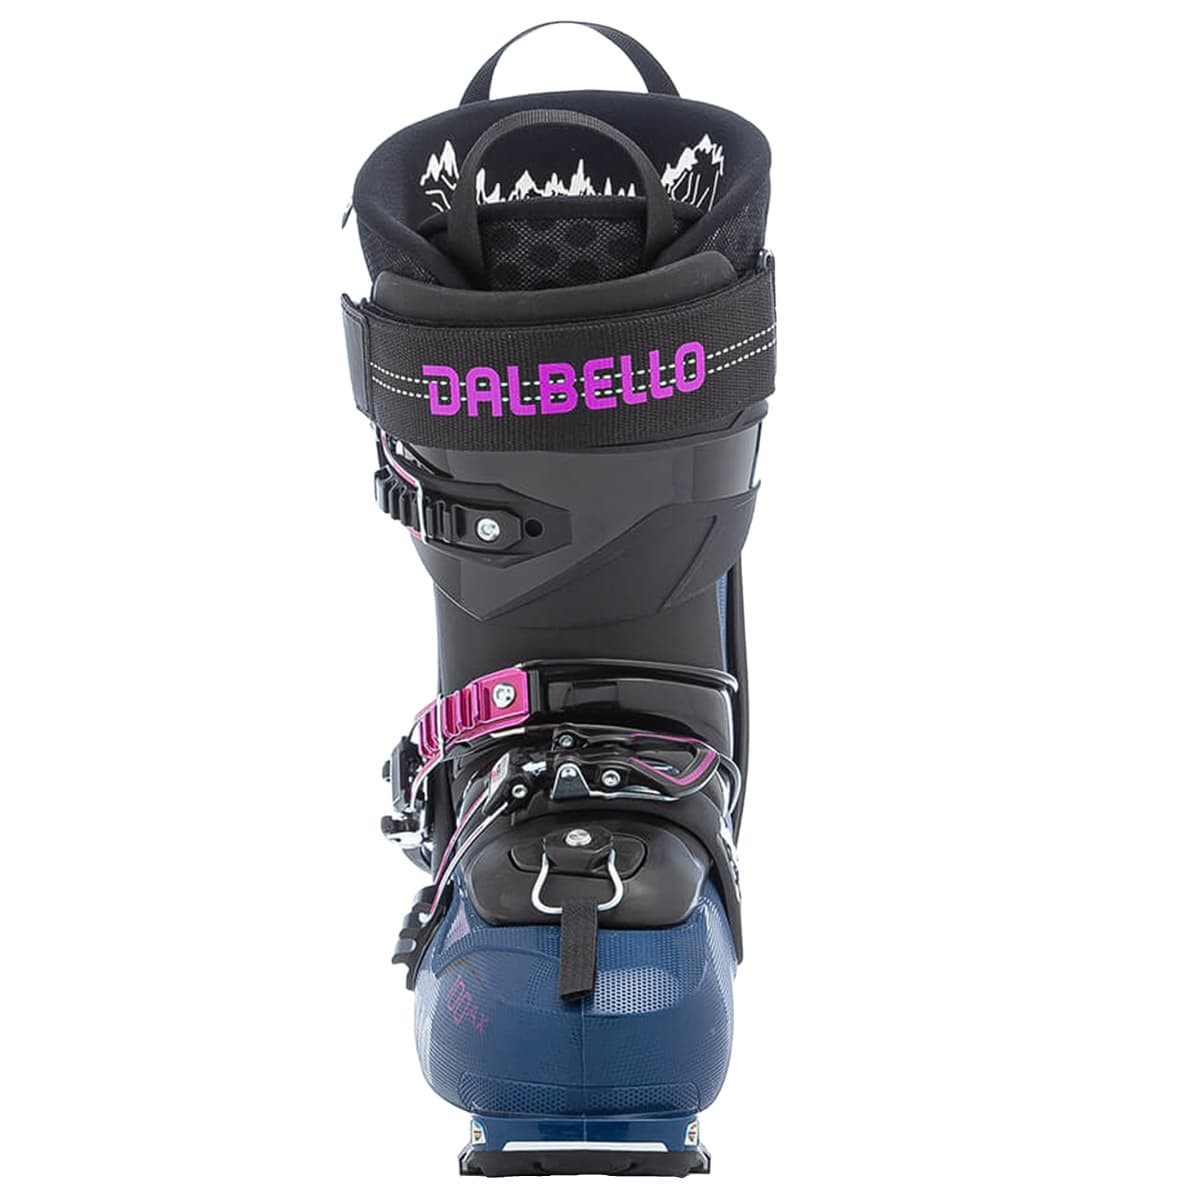 Dalbello Lupo AX 100 Women's Ski Boots